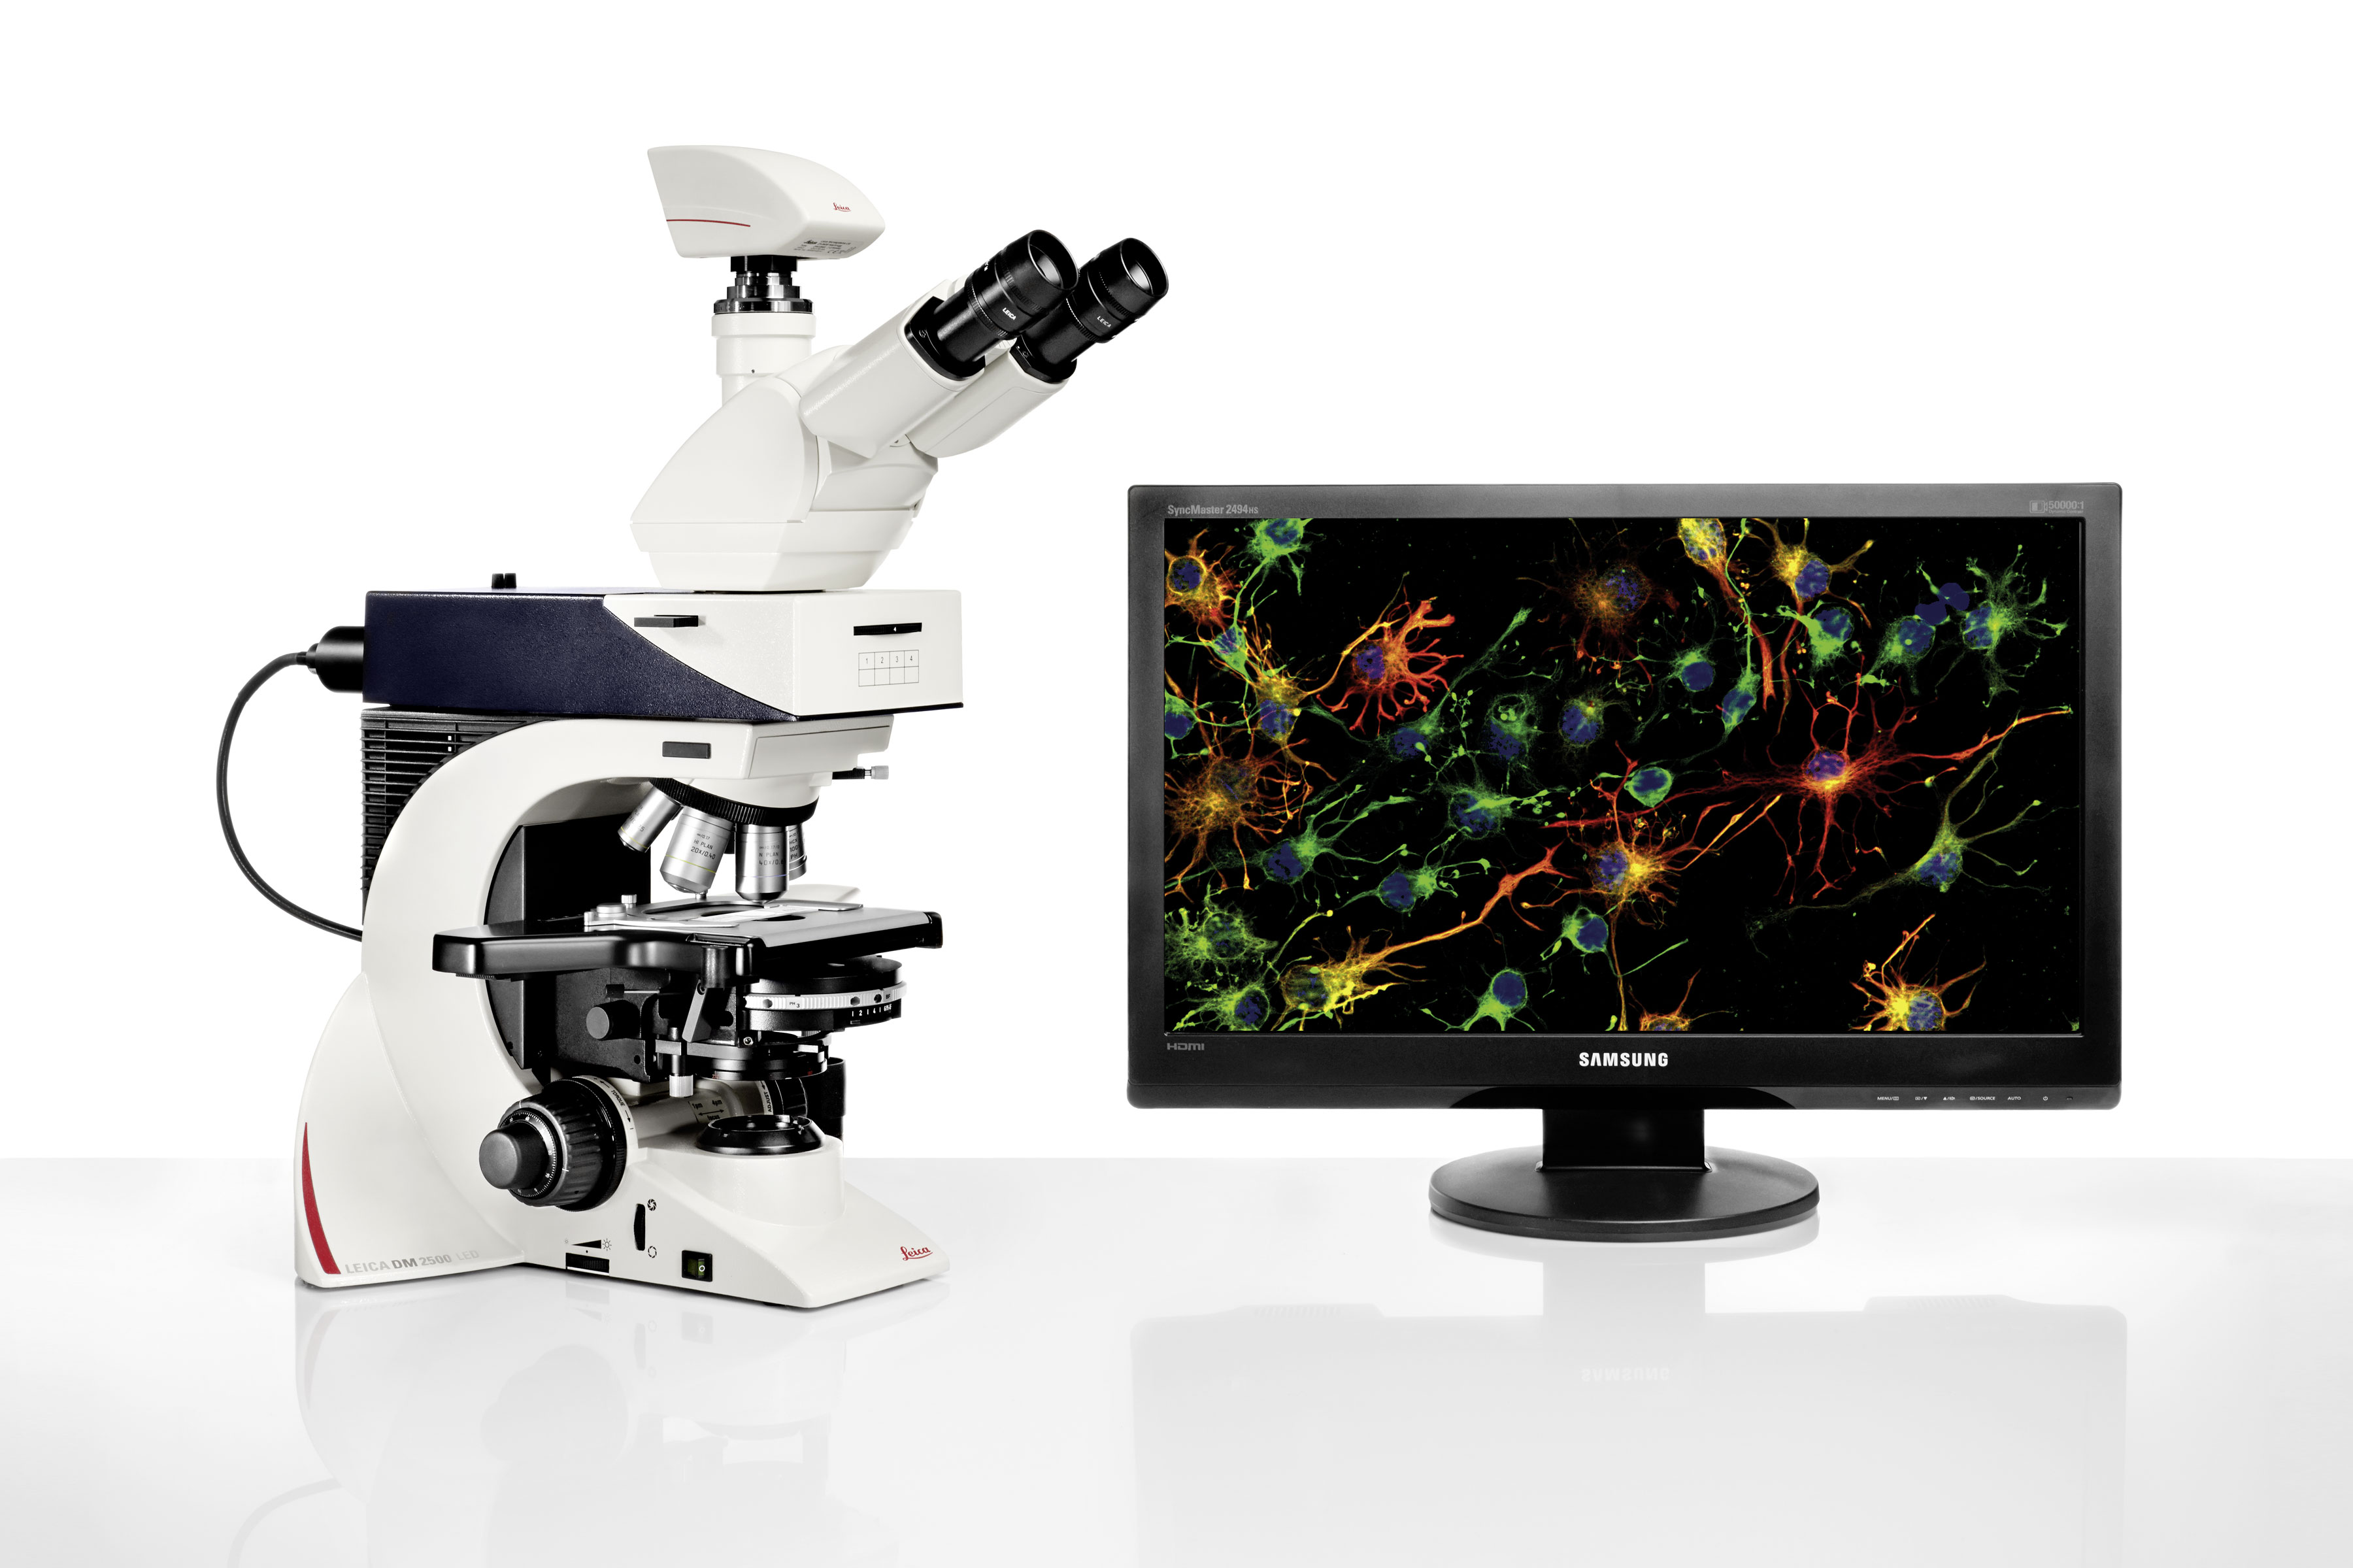 Ergonomic microscope system Leica DM2500 LED for demanding tasks in life science applications